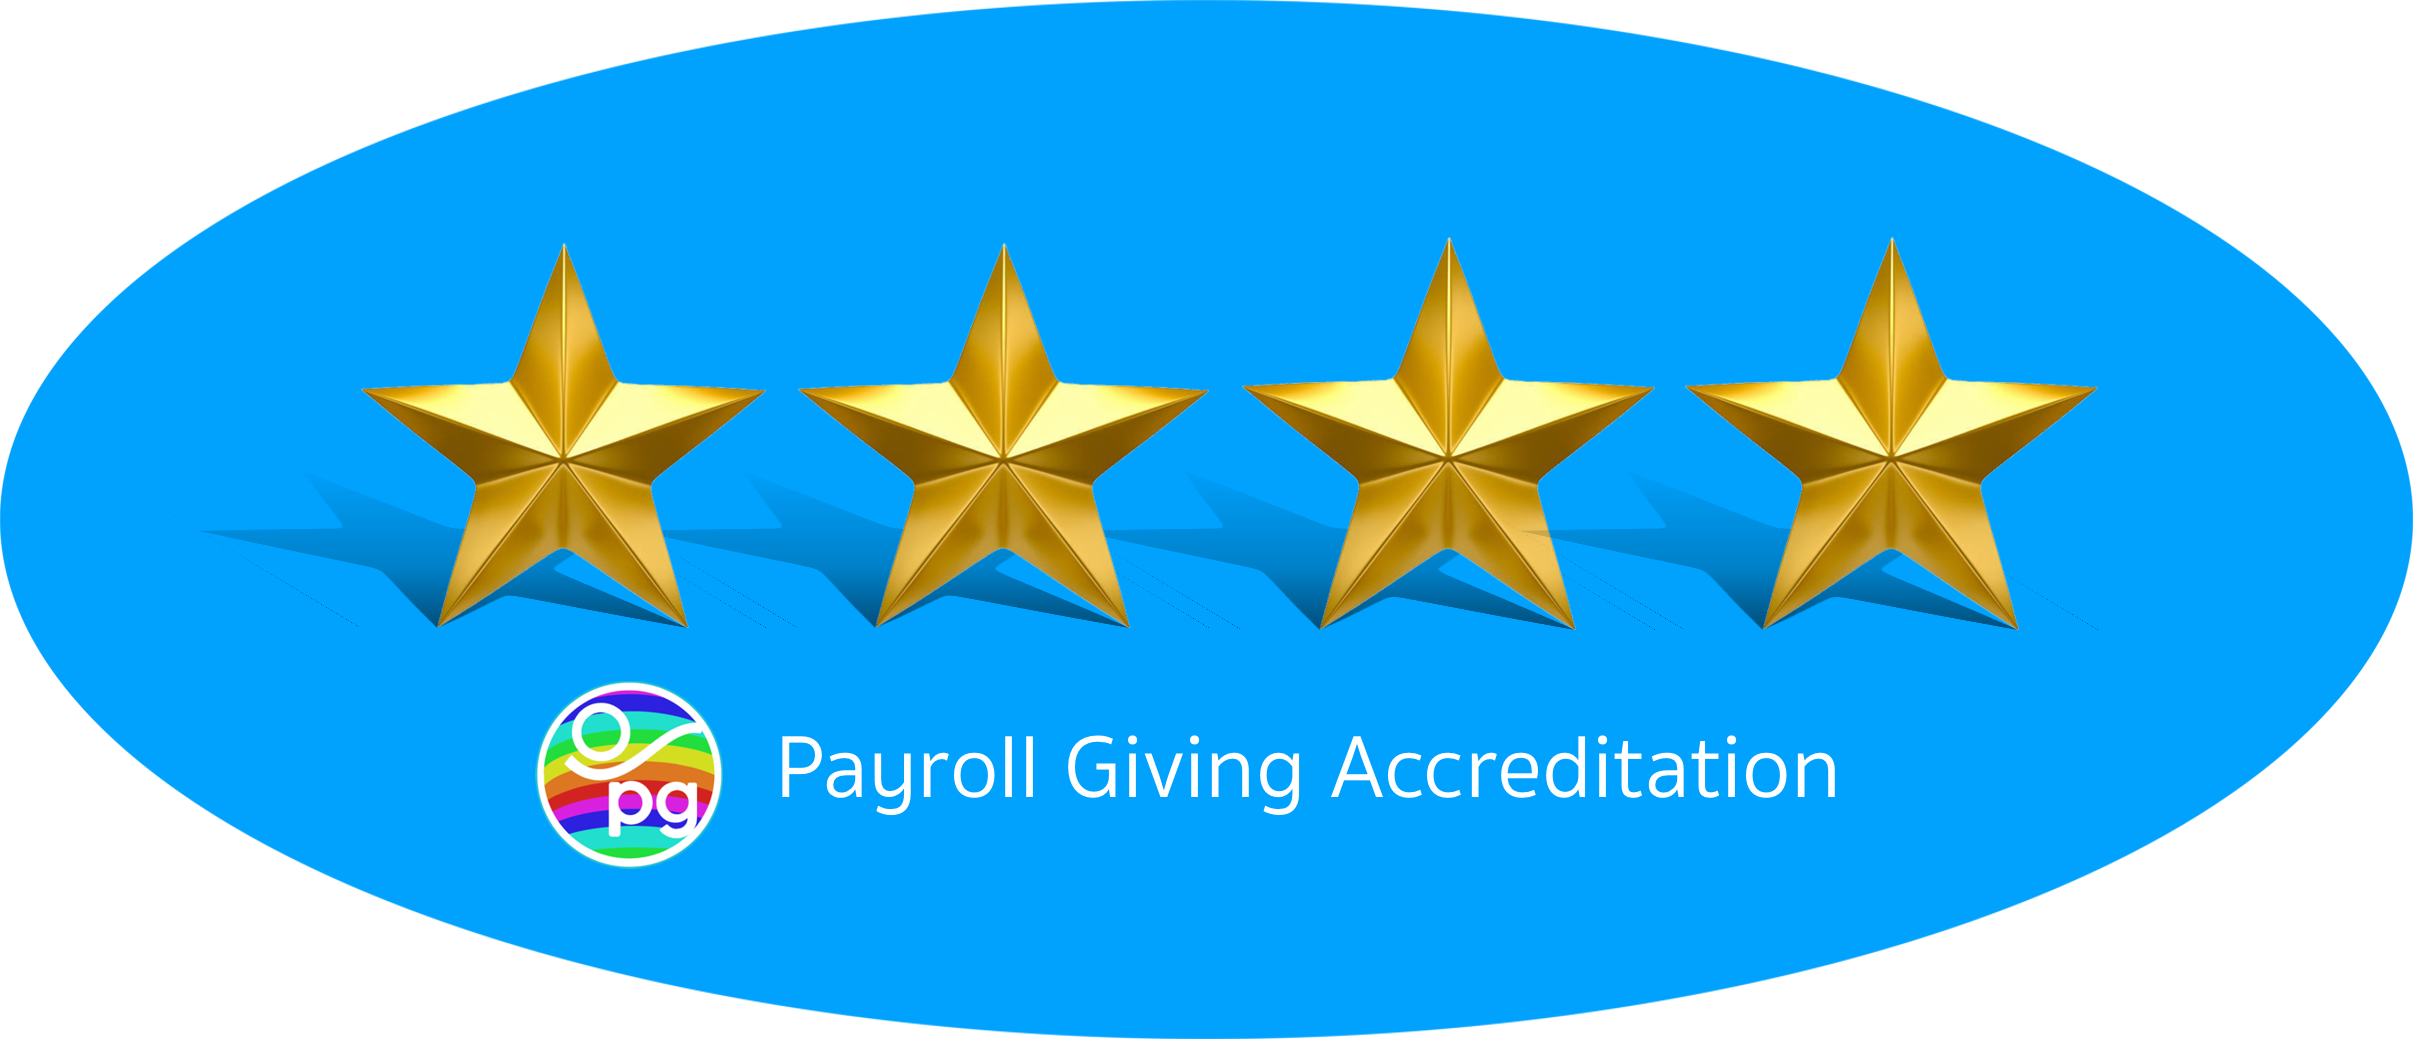 Payroll Giving Accreditation - 4 stars